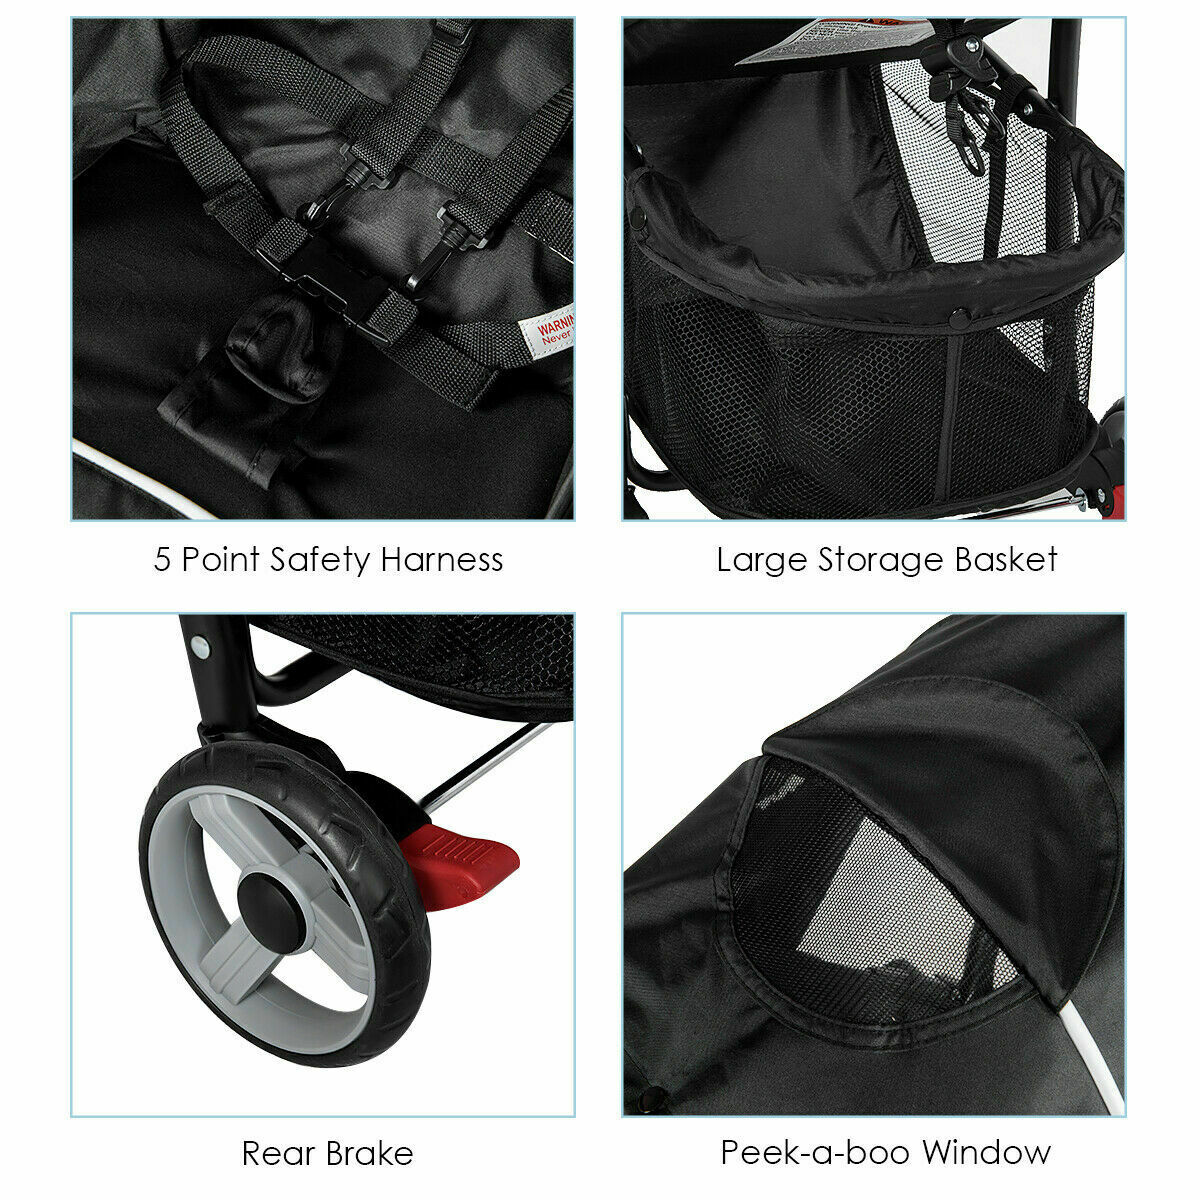 Lightweight 5-Point Baby Stroller AliExpress